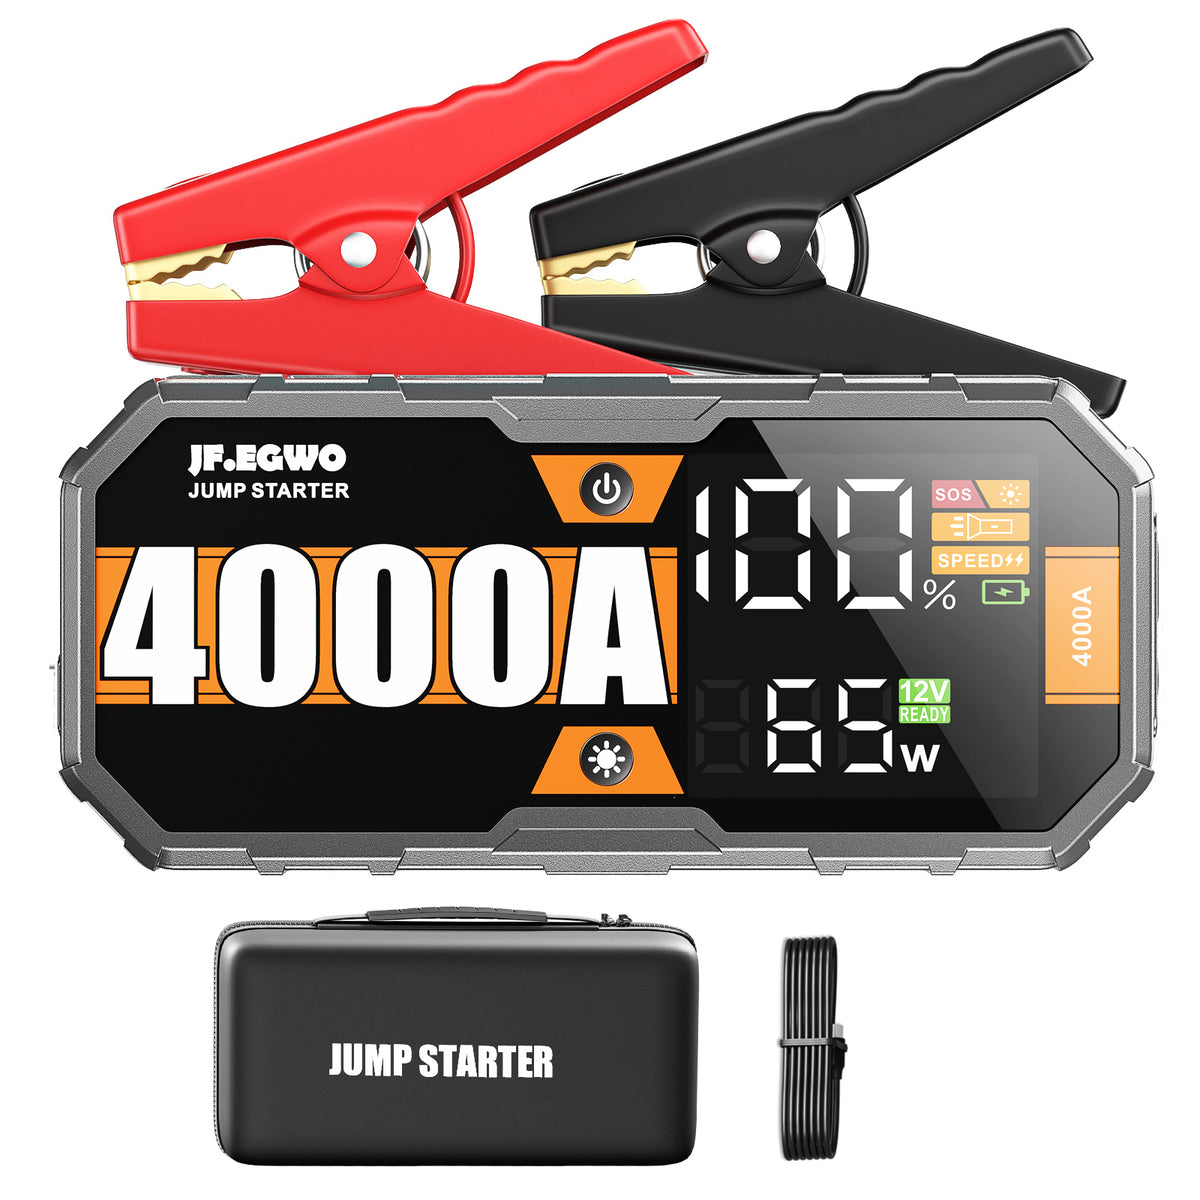 JFEGWO 4000A Starthilfe Auto Batterie Booster 65W Schnell ladung insgesamt 230W Power bank, Pro